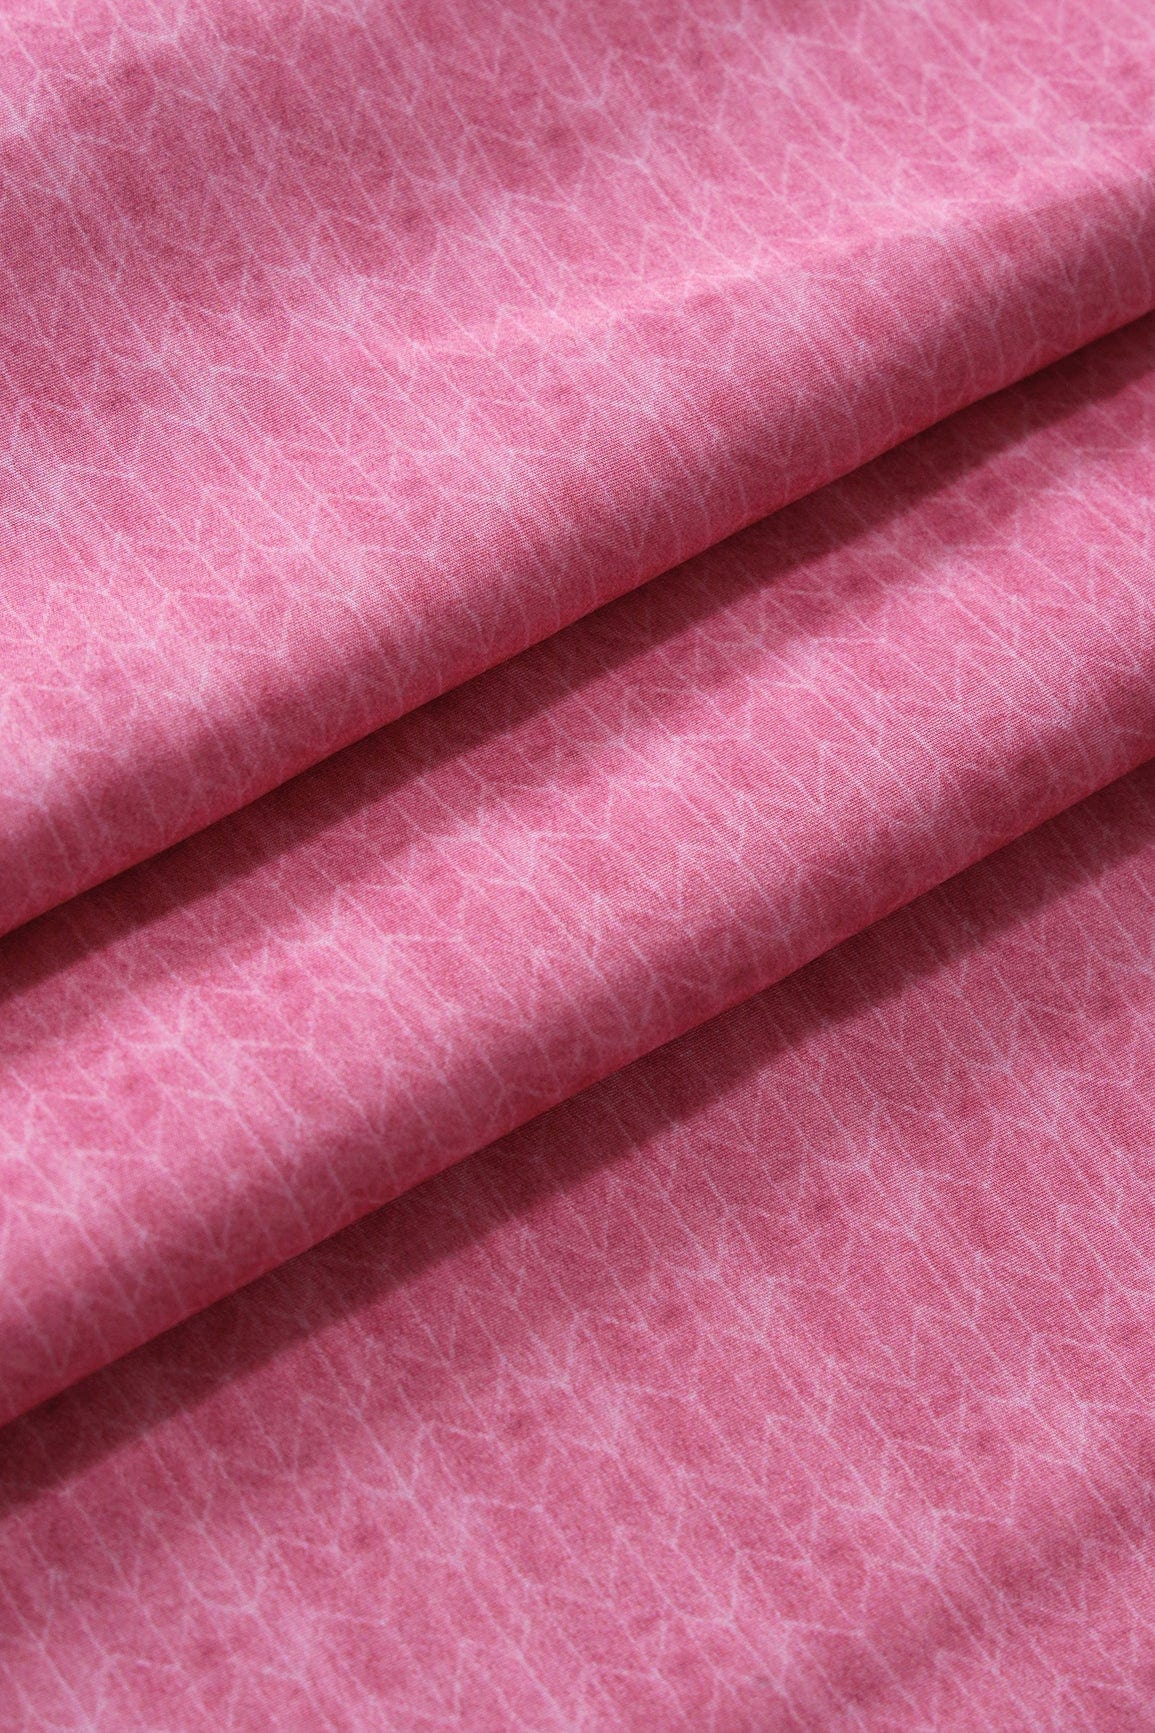 doeraa Prints Pink Chevron Pattern Digital Print On French Crepe Fabric